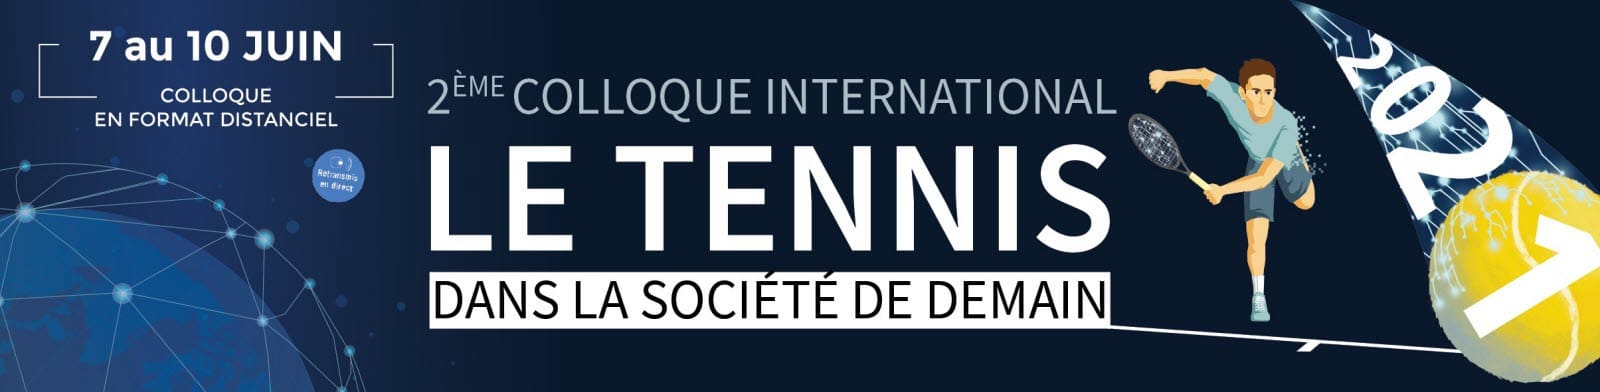 Un colloque de haut niveau à Dijon durant Roland-Garros